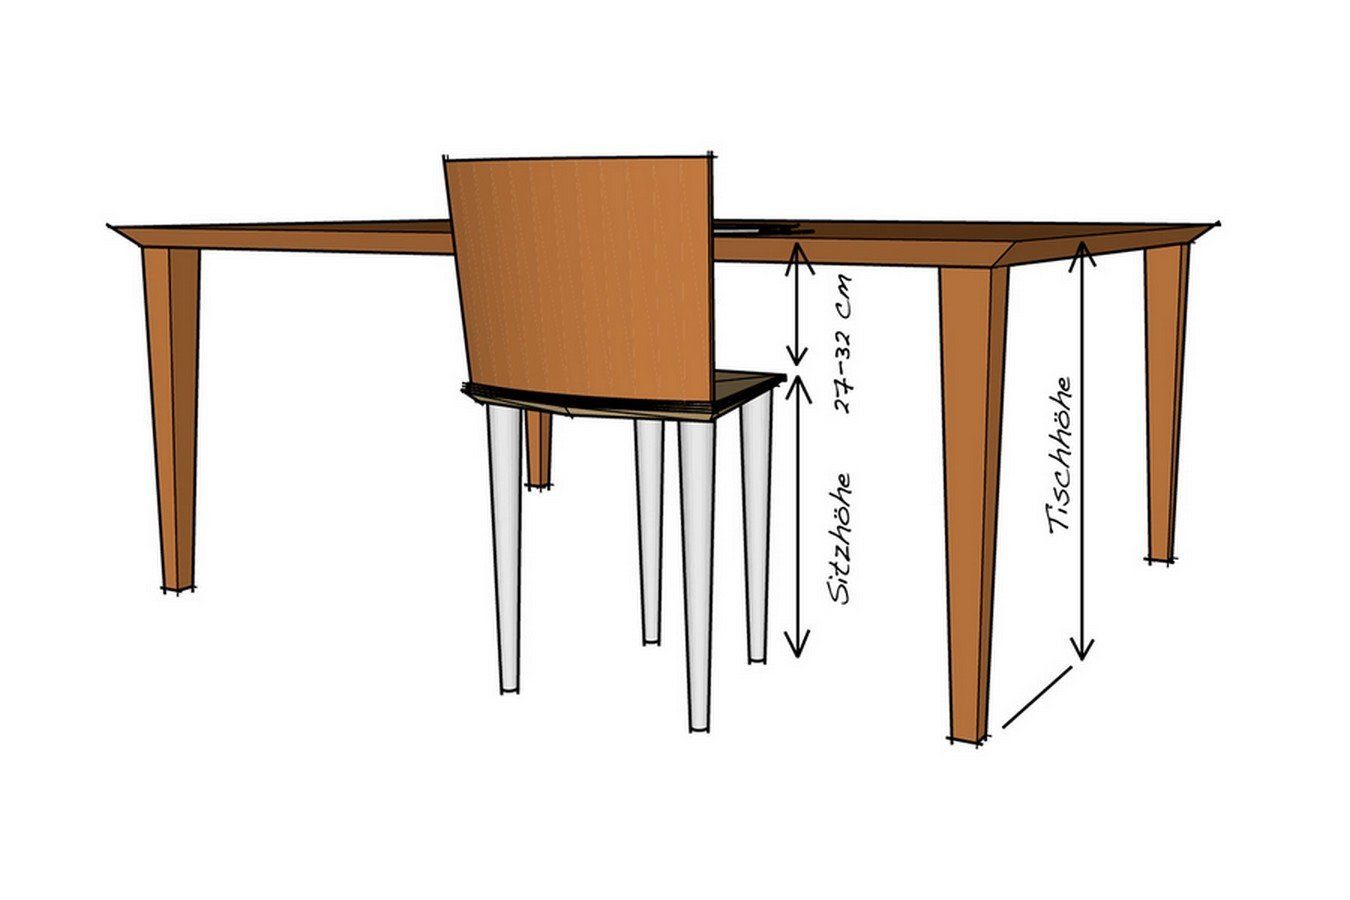 Bohlen Tischhelden Scheunen Tischplatte alten Tischplatte aus